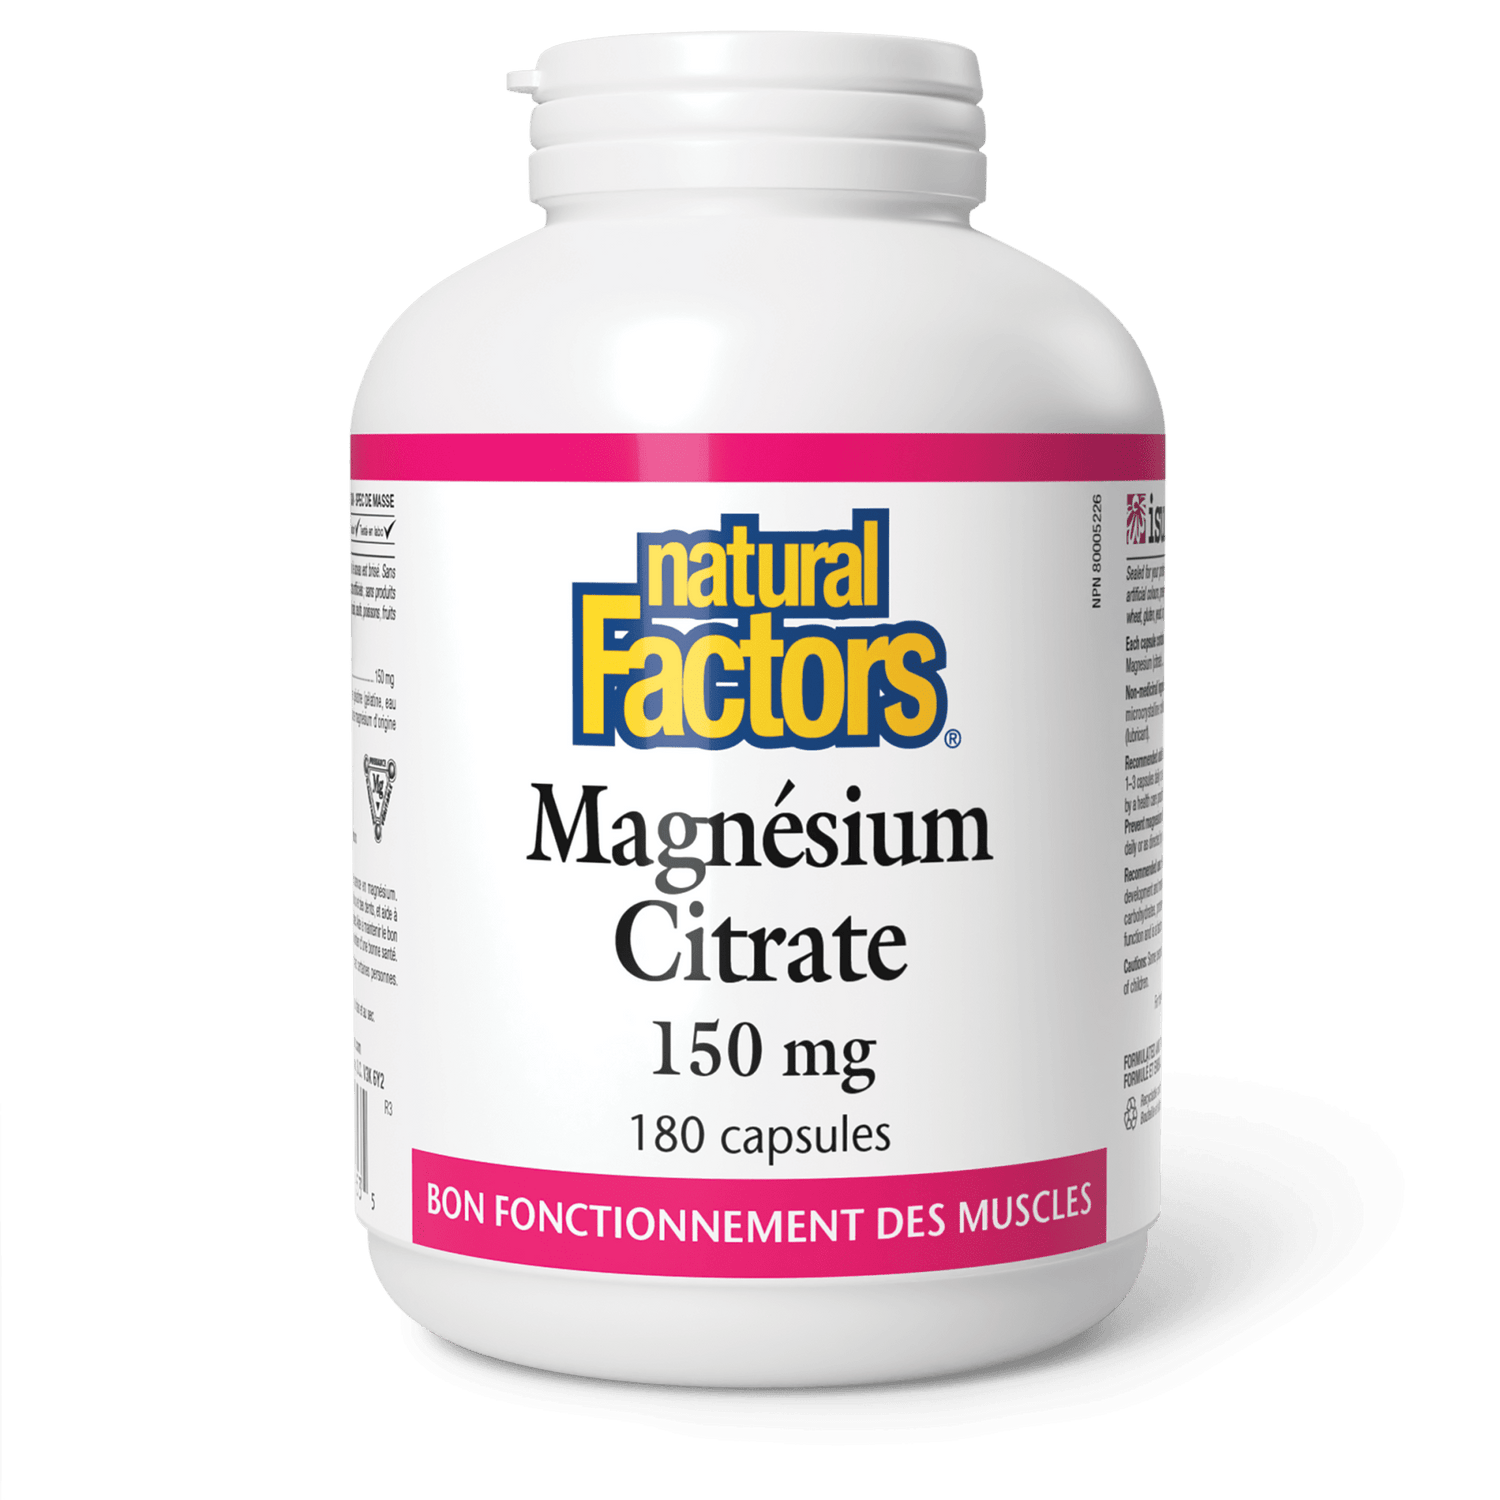 Magnésium Citrate 150 mg, Natural Factors|v|image|1653